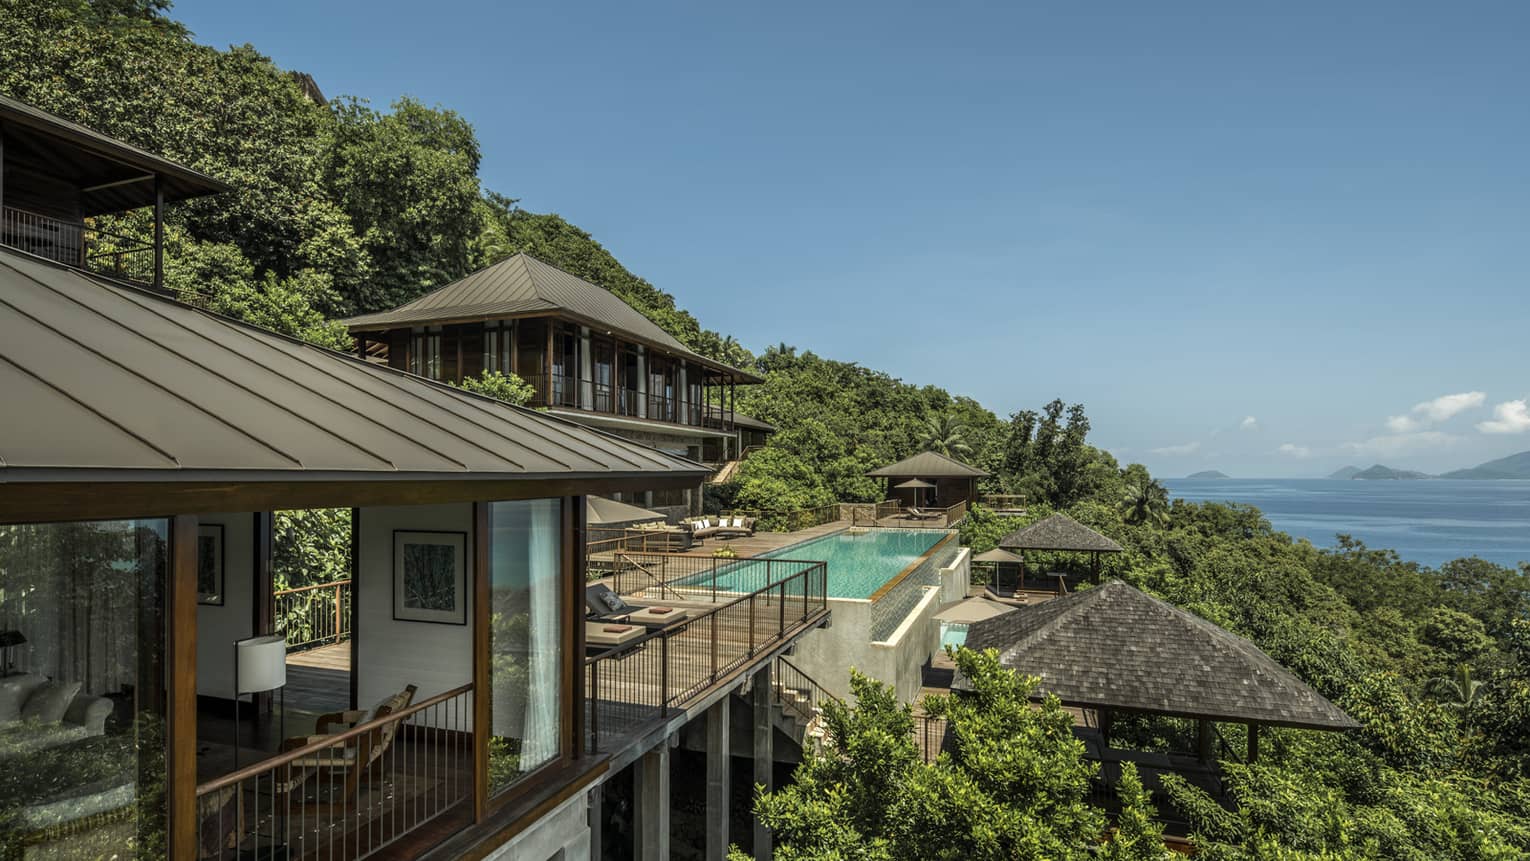 Four-Bedroom Residence Villa roofs, patios amid trees on mountain, ocean below